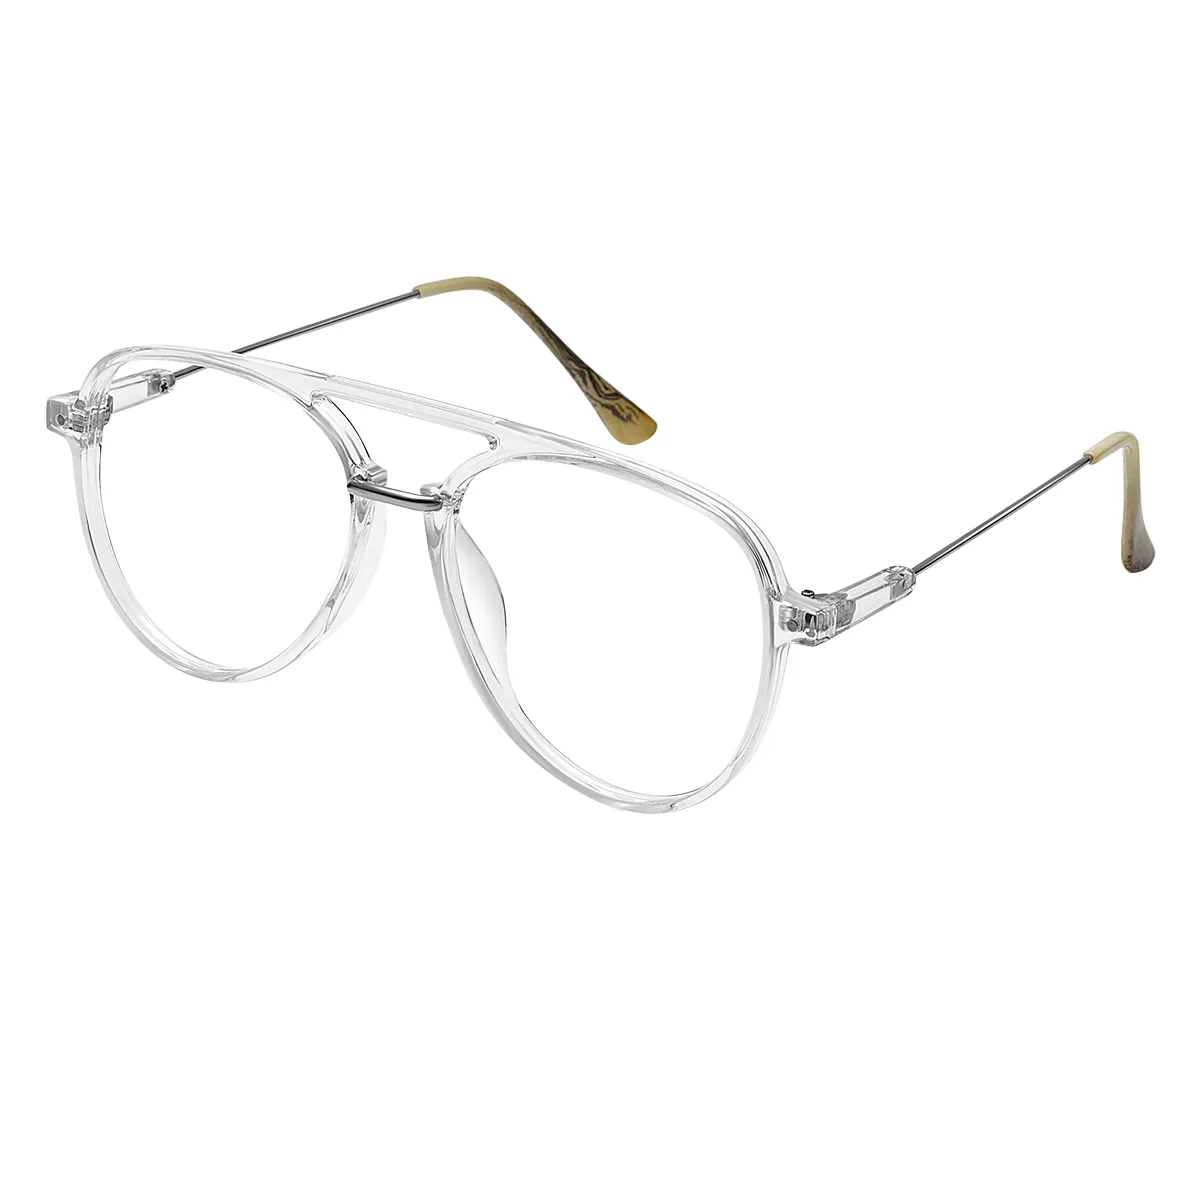 Nichols - Aviator Translucent Glasses for Men & Women